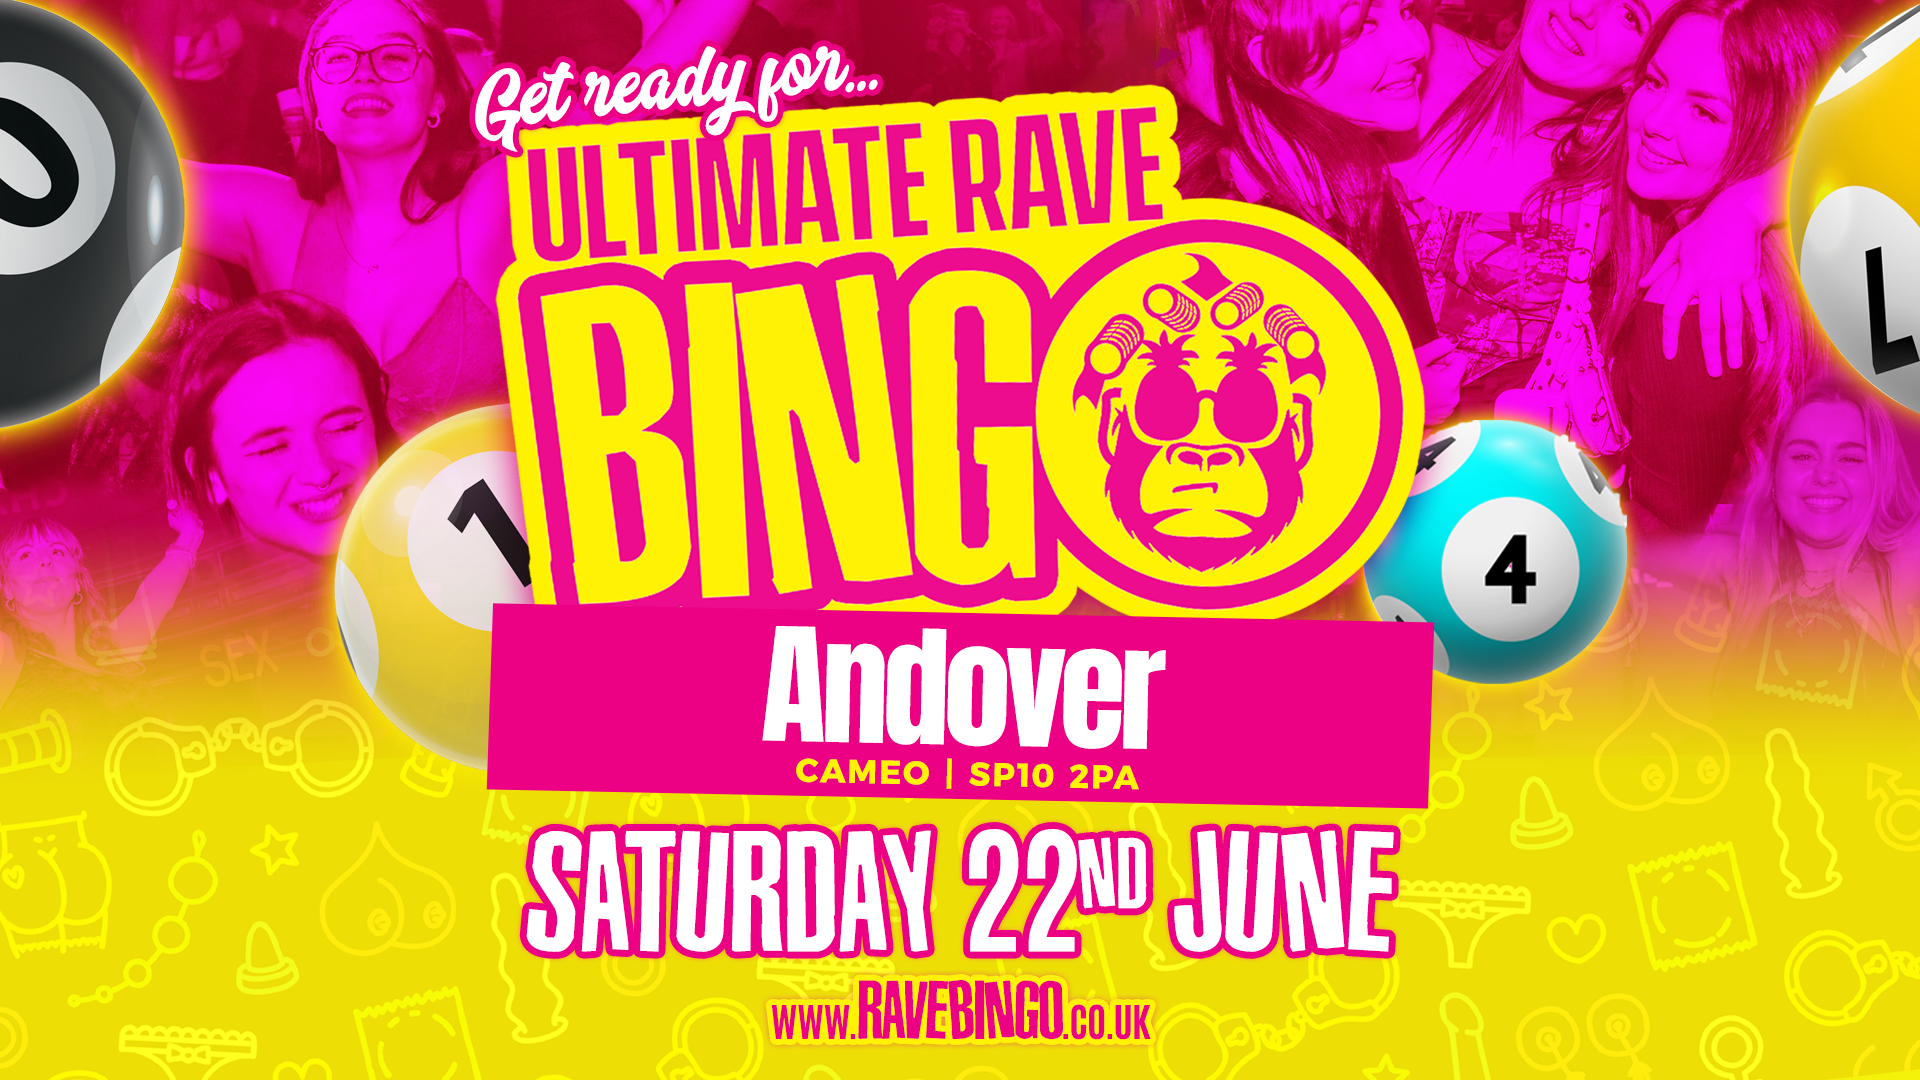 Ultimate Rave Bingo // Andover // Saturday 22nd June